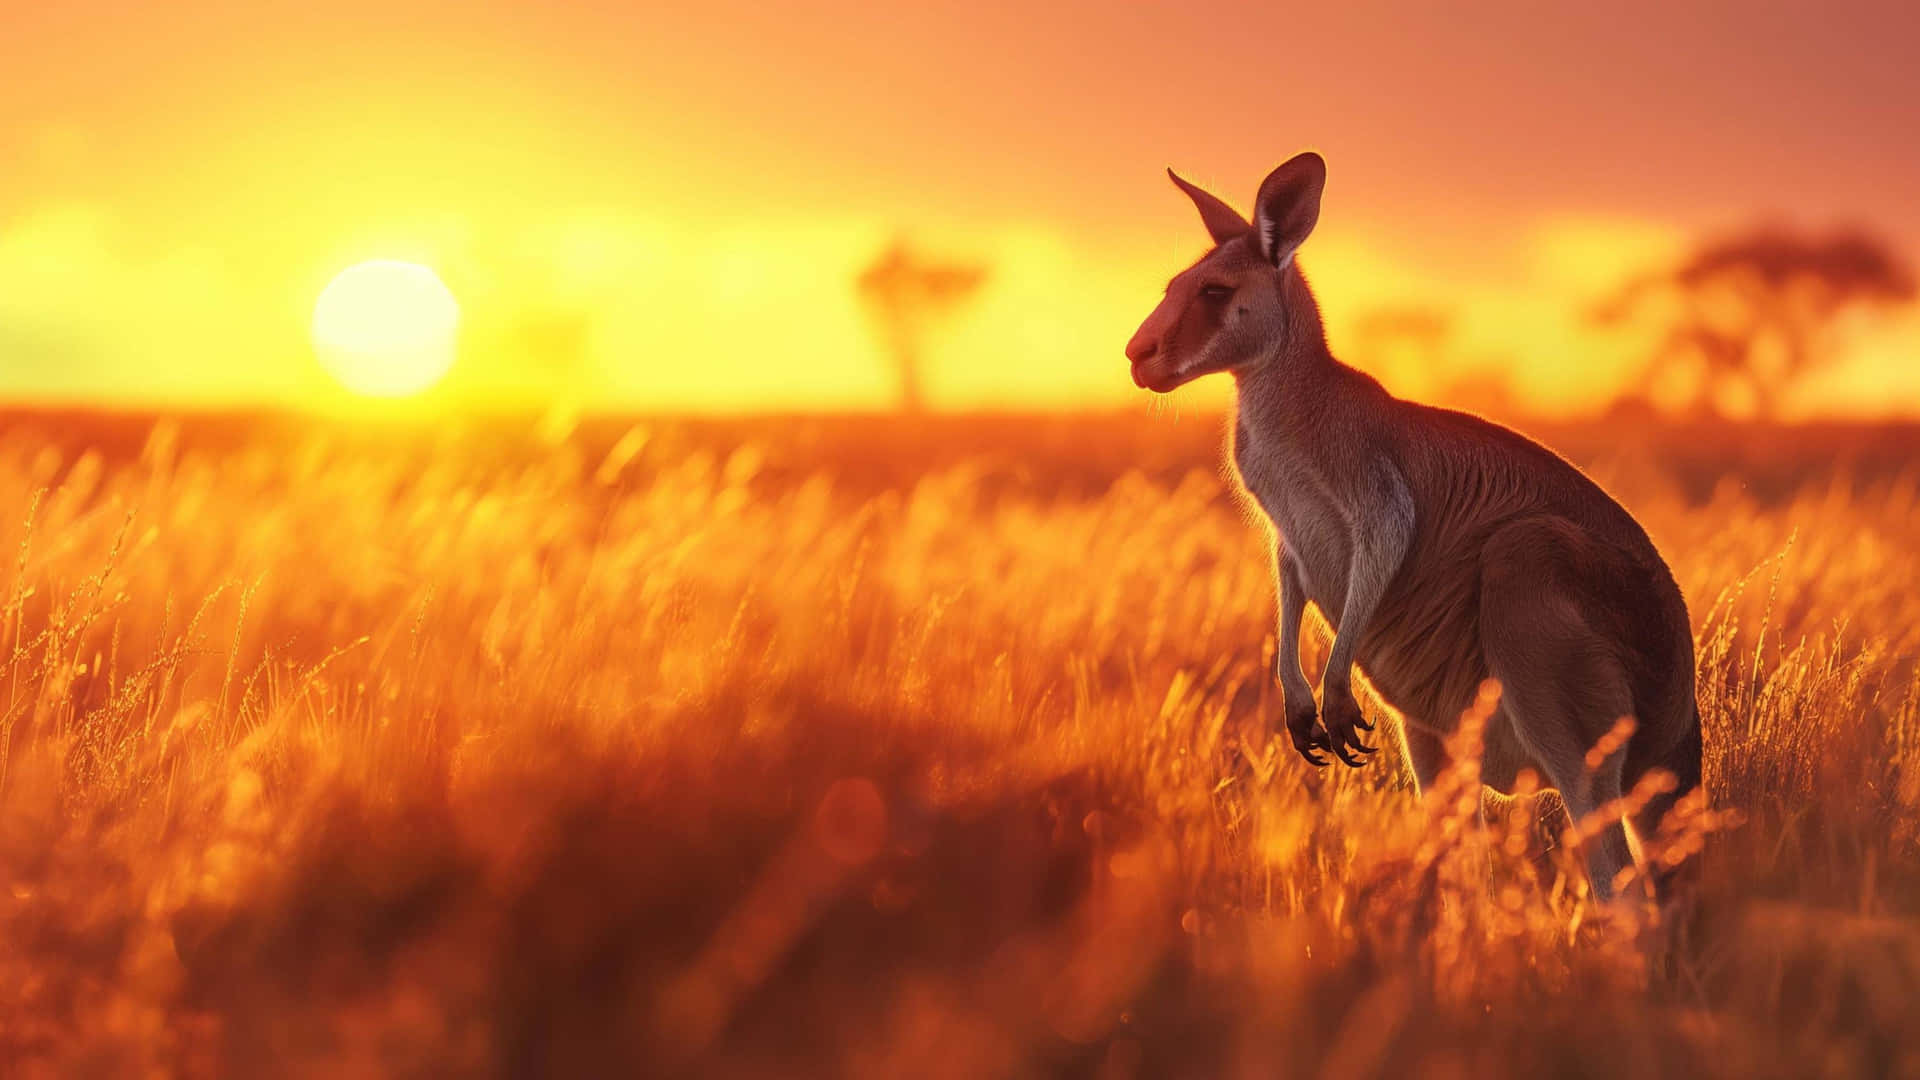 Kangarooin Sunset Field4 K Wallpaper